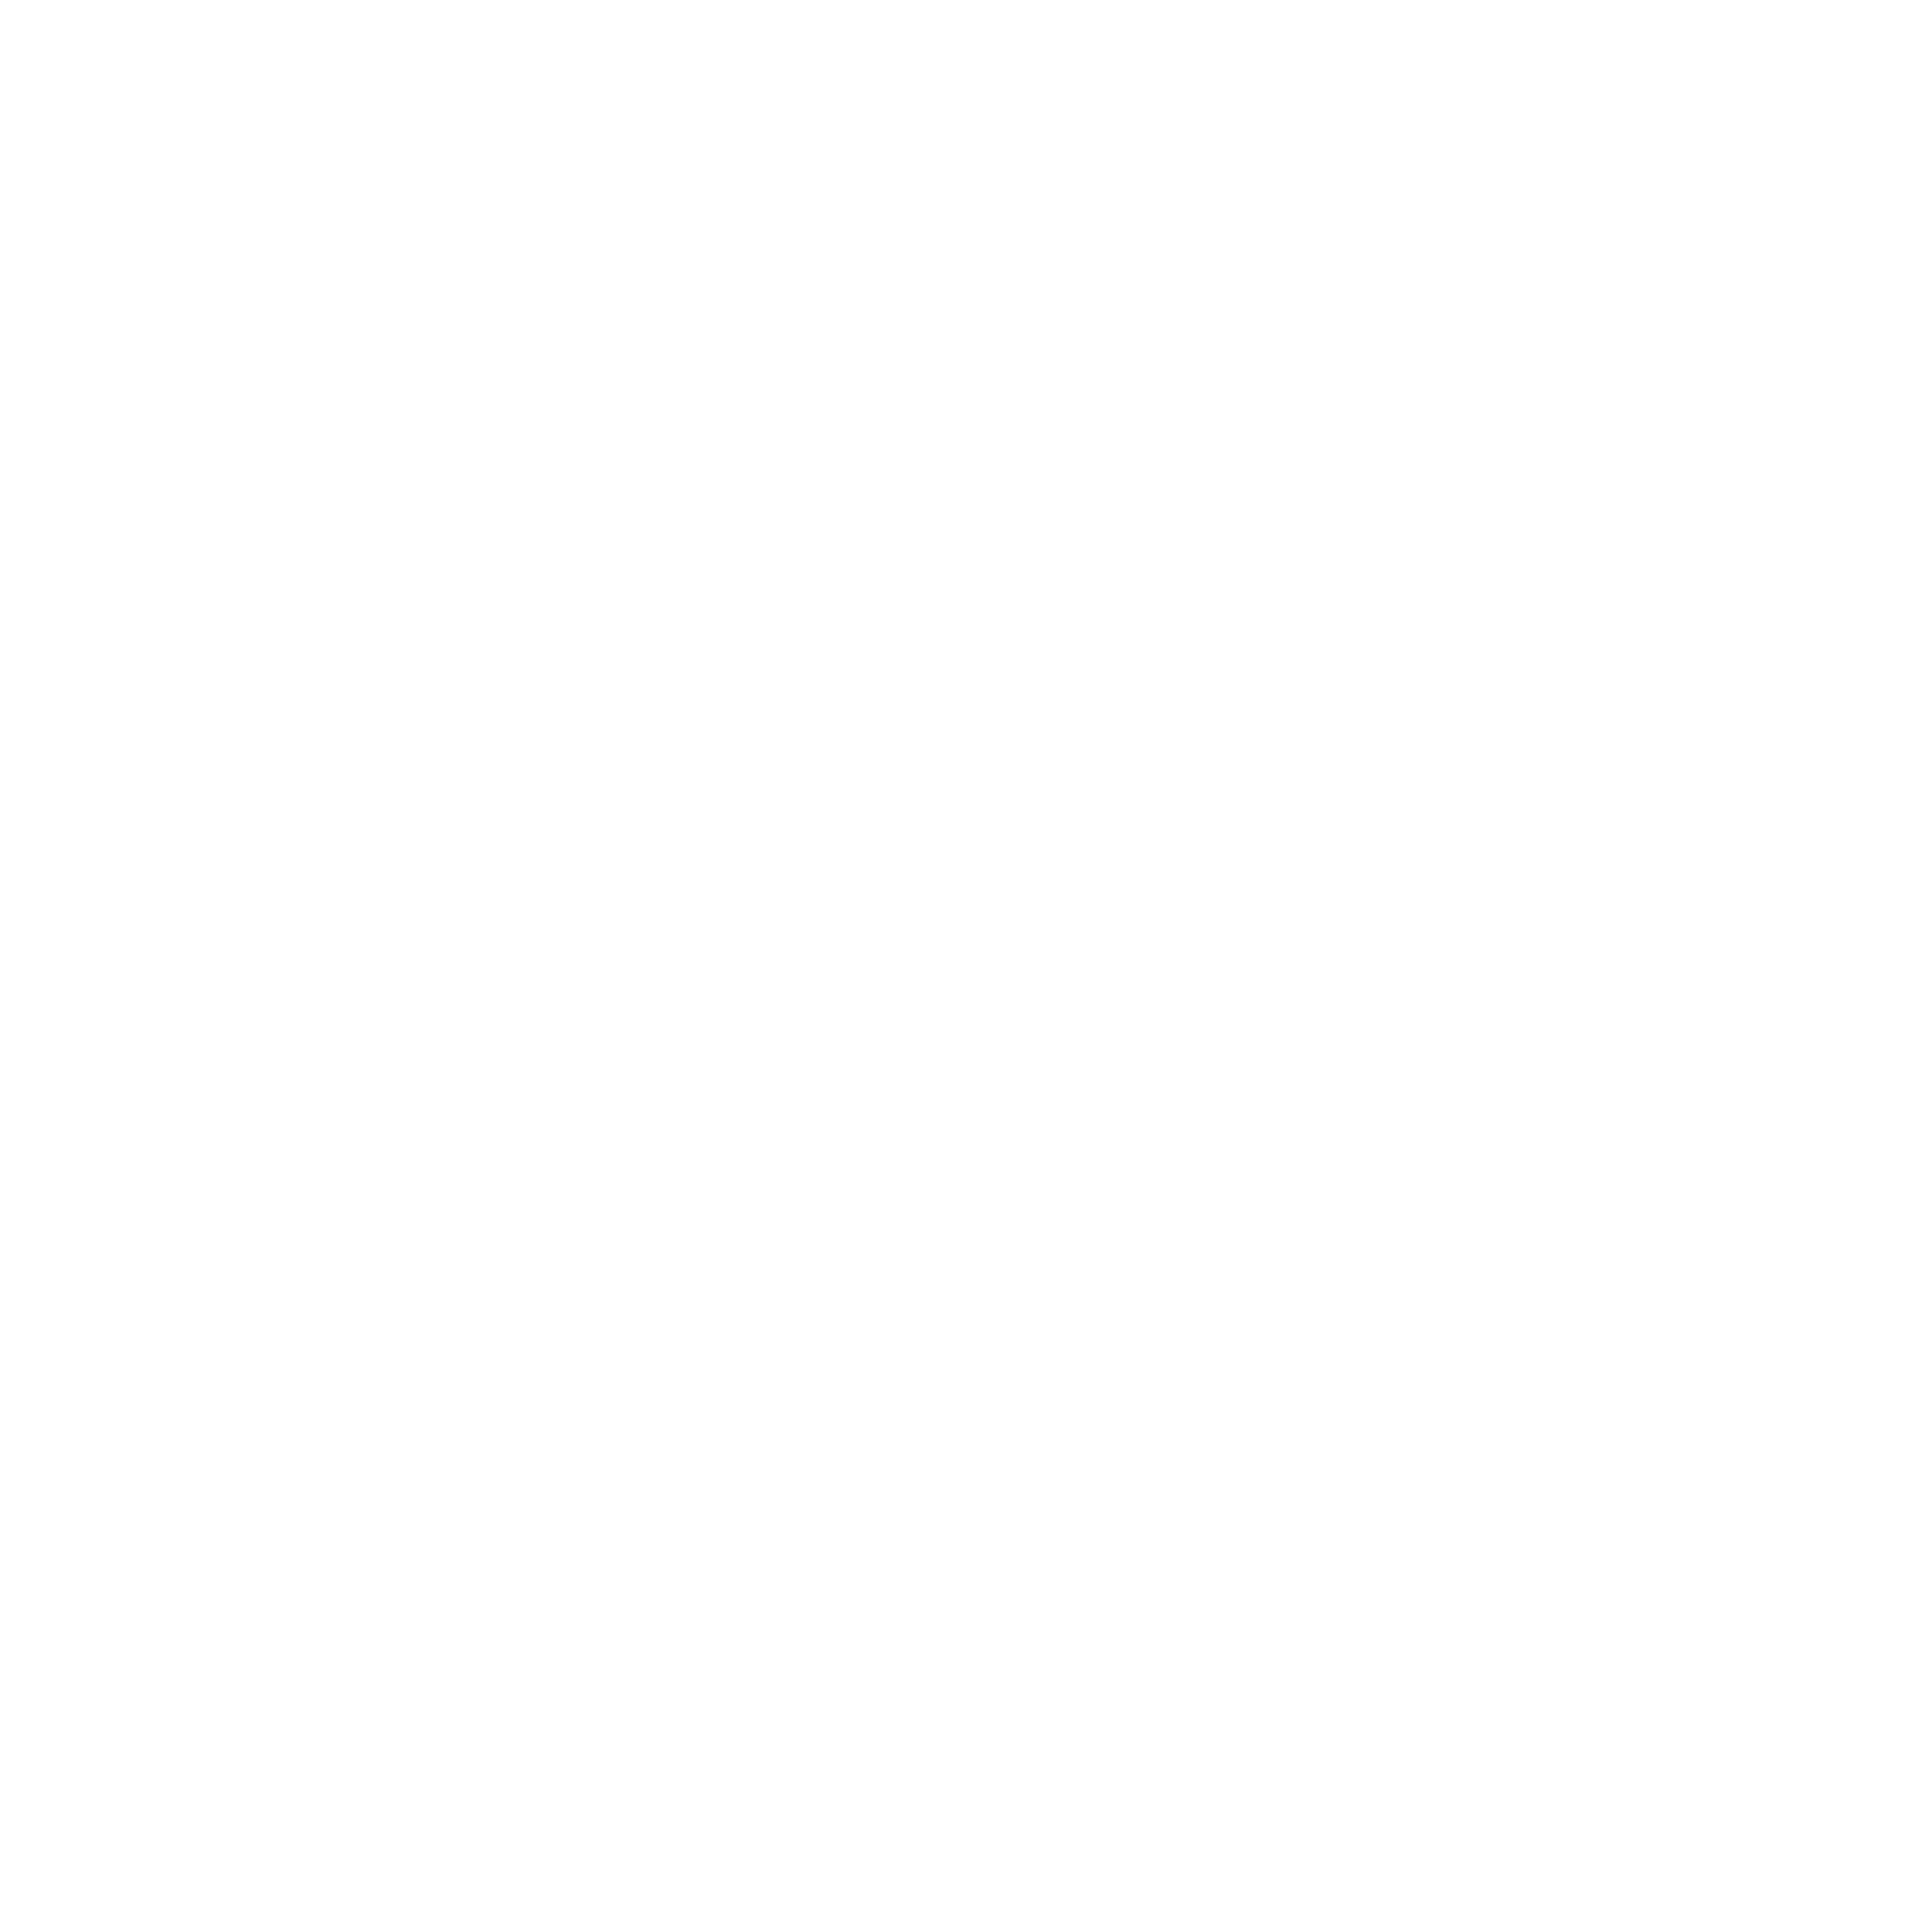 CANIE Awards 2-white